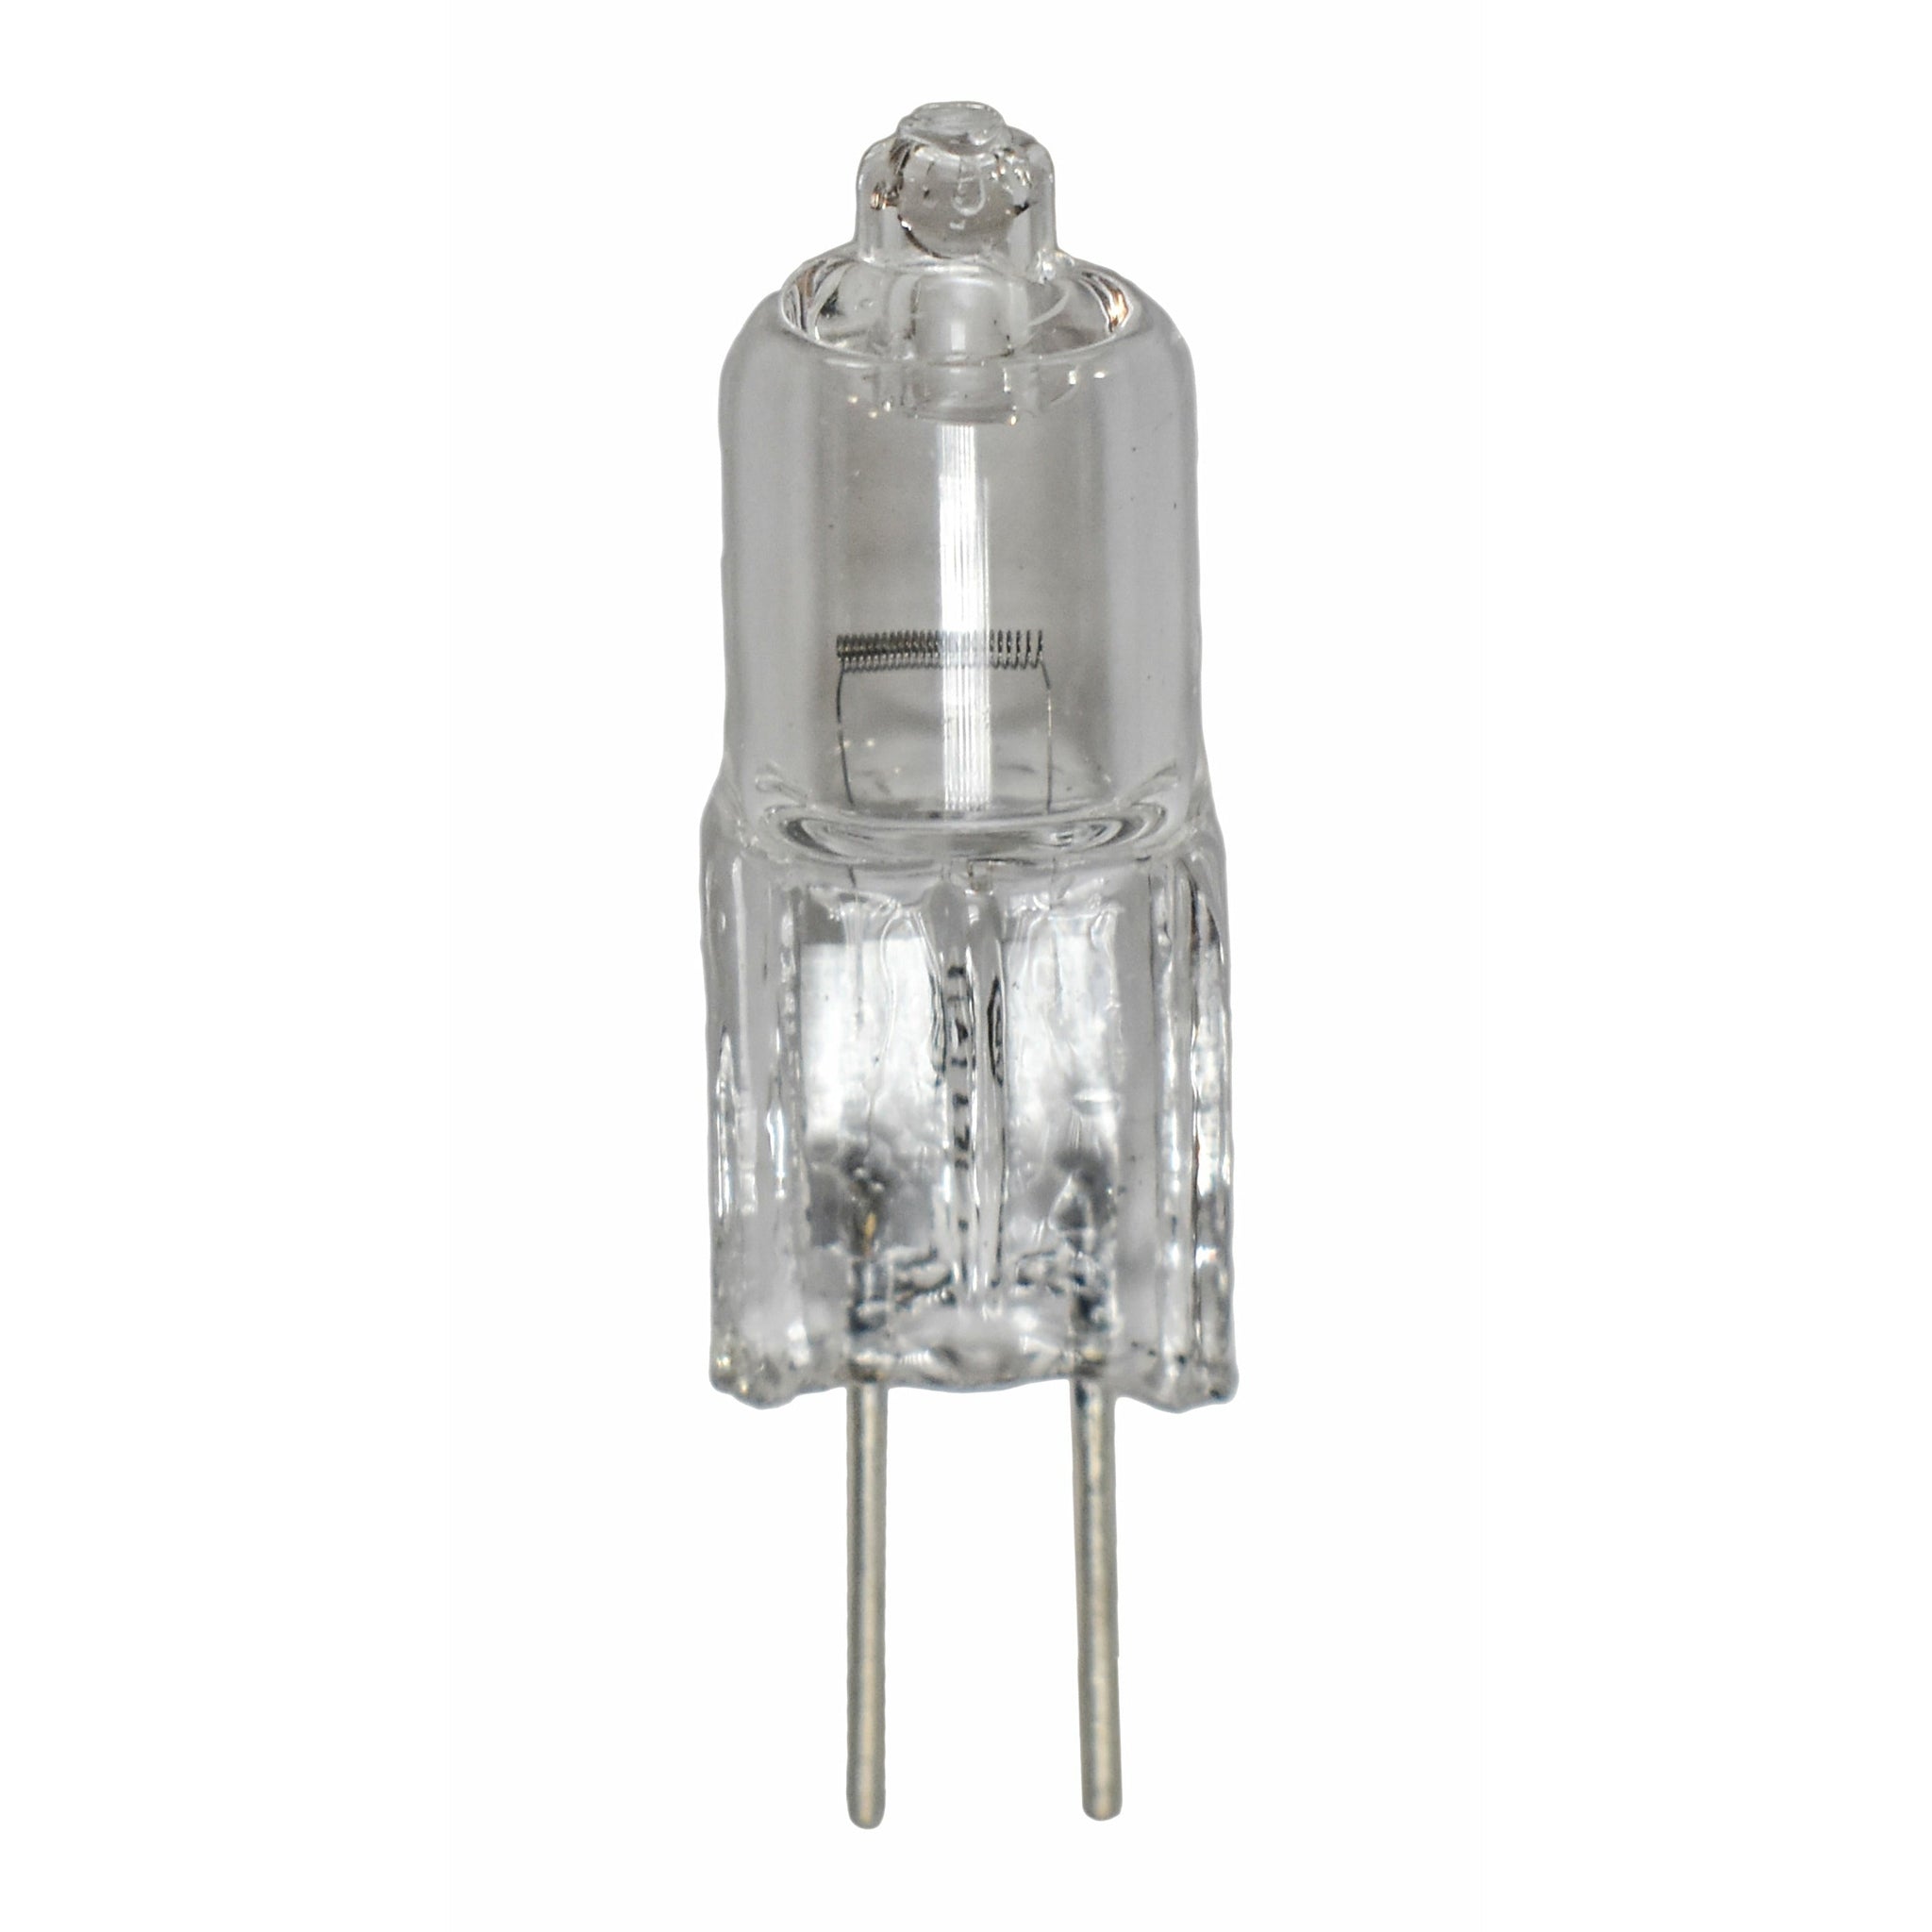 10W Xenon Bi-Pin G4 12V Bulb Clear